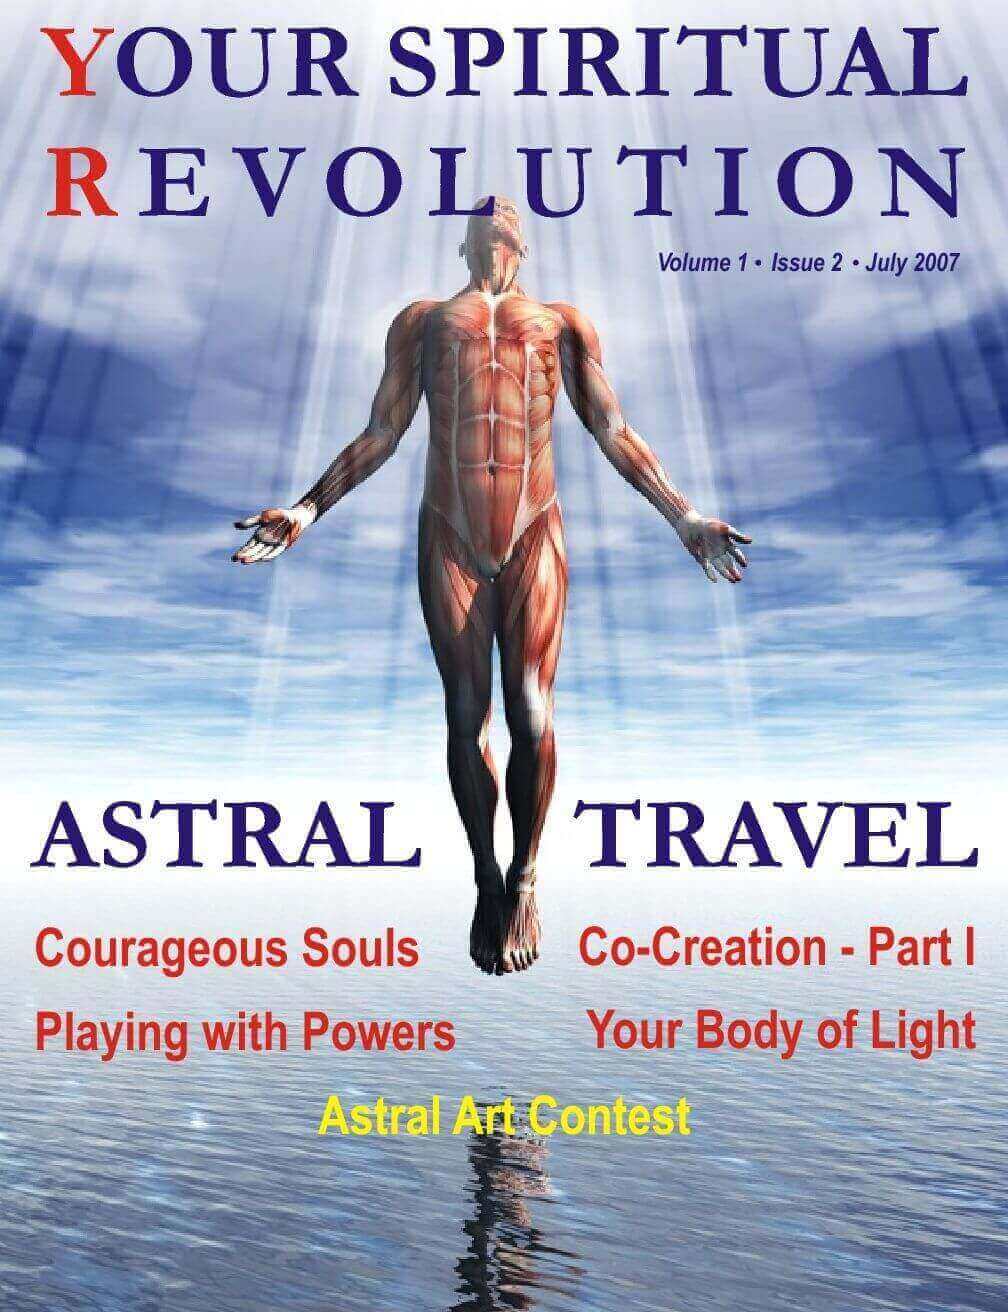 Astral Travel - Your Spiritual Revolution